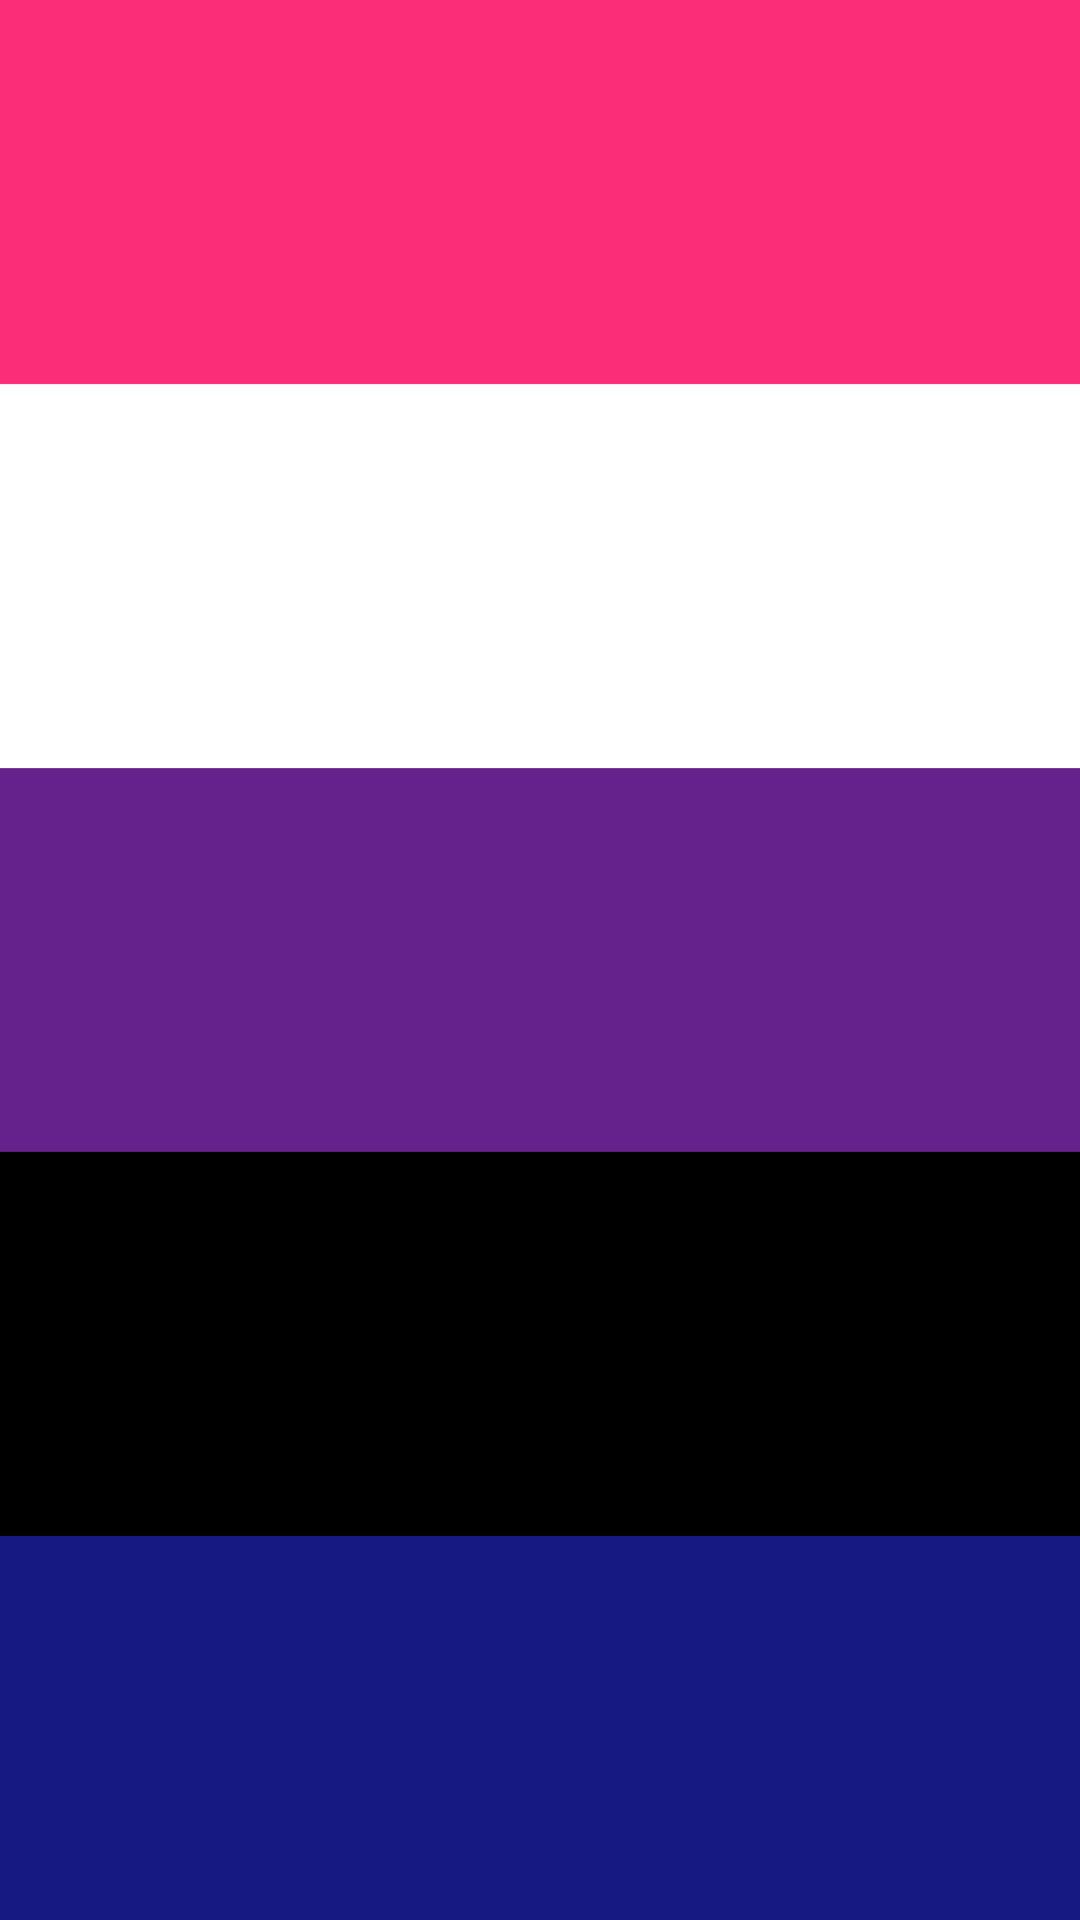 lesbian flag lockscreen